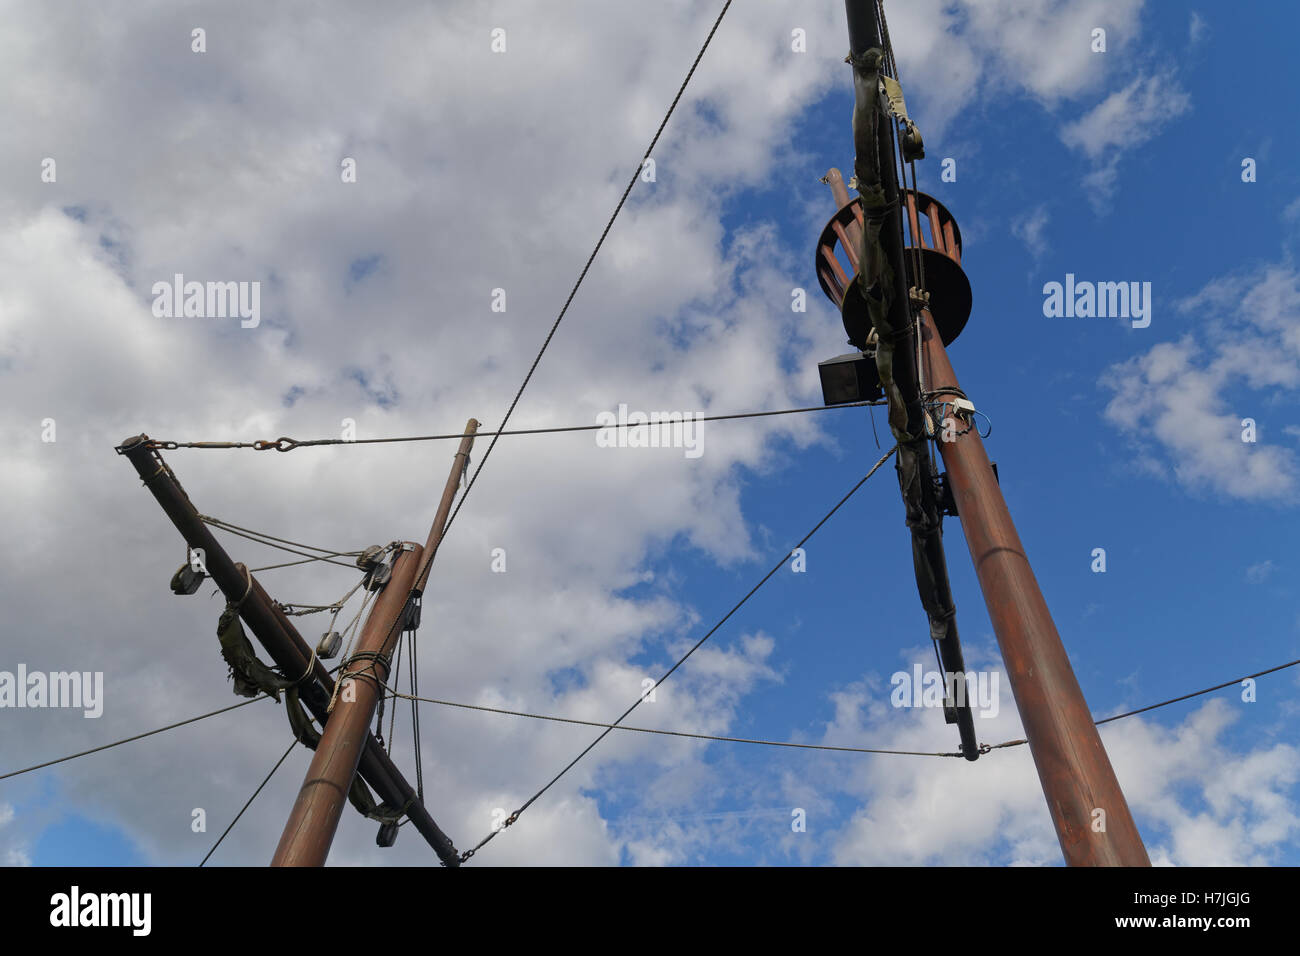 children's playground crows nest and mast Stock Photo